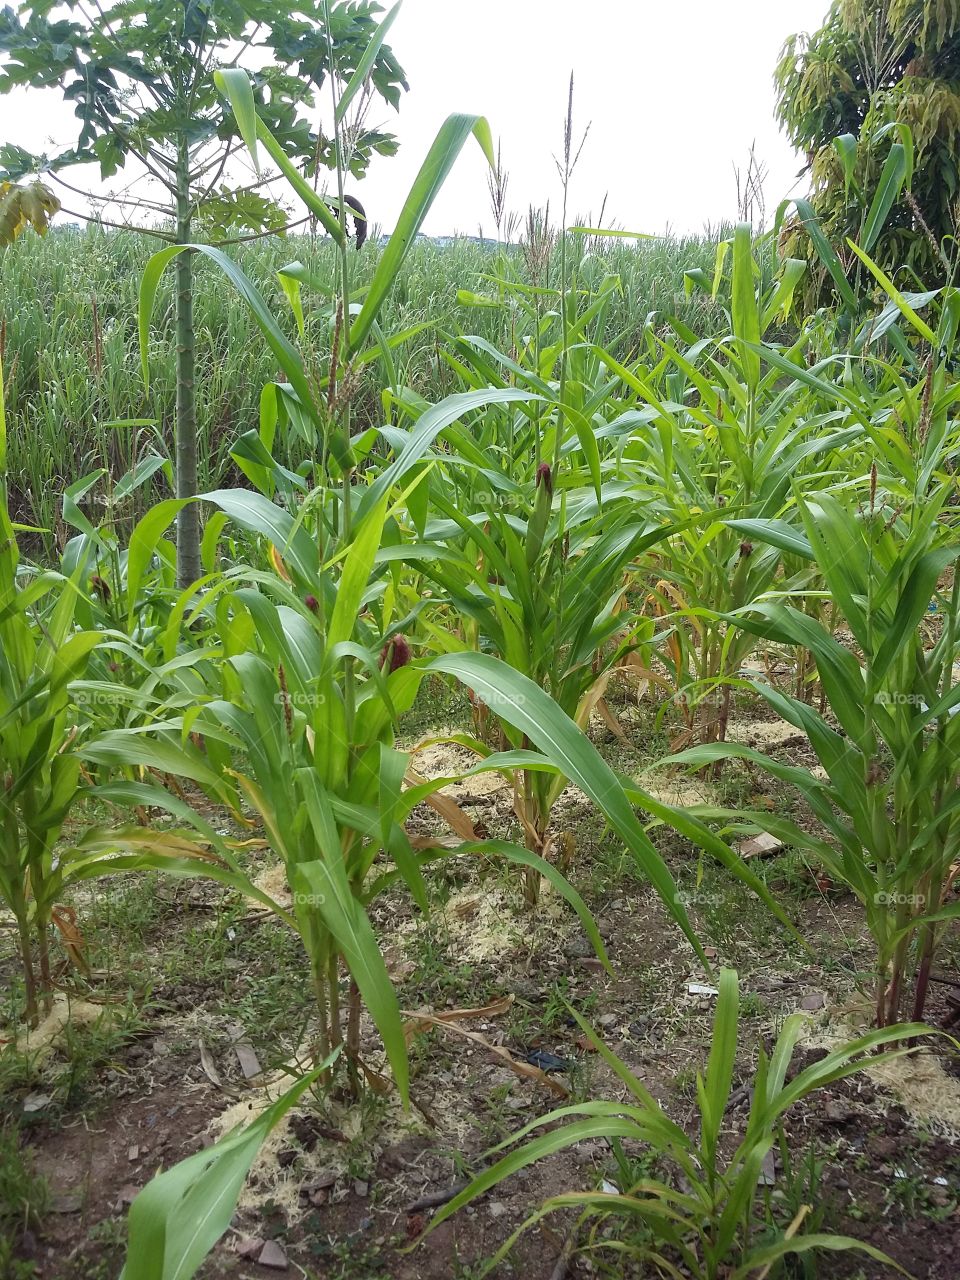 Corn Plantation in Ipojuca, Pernambuco, Brazil.